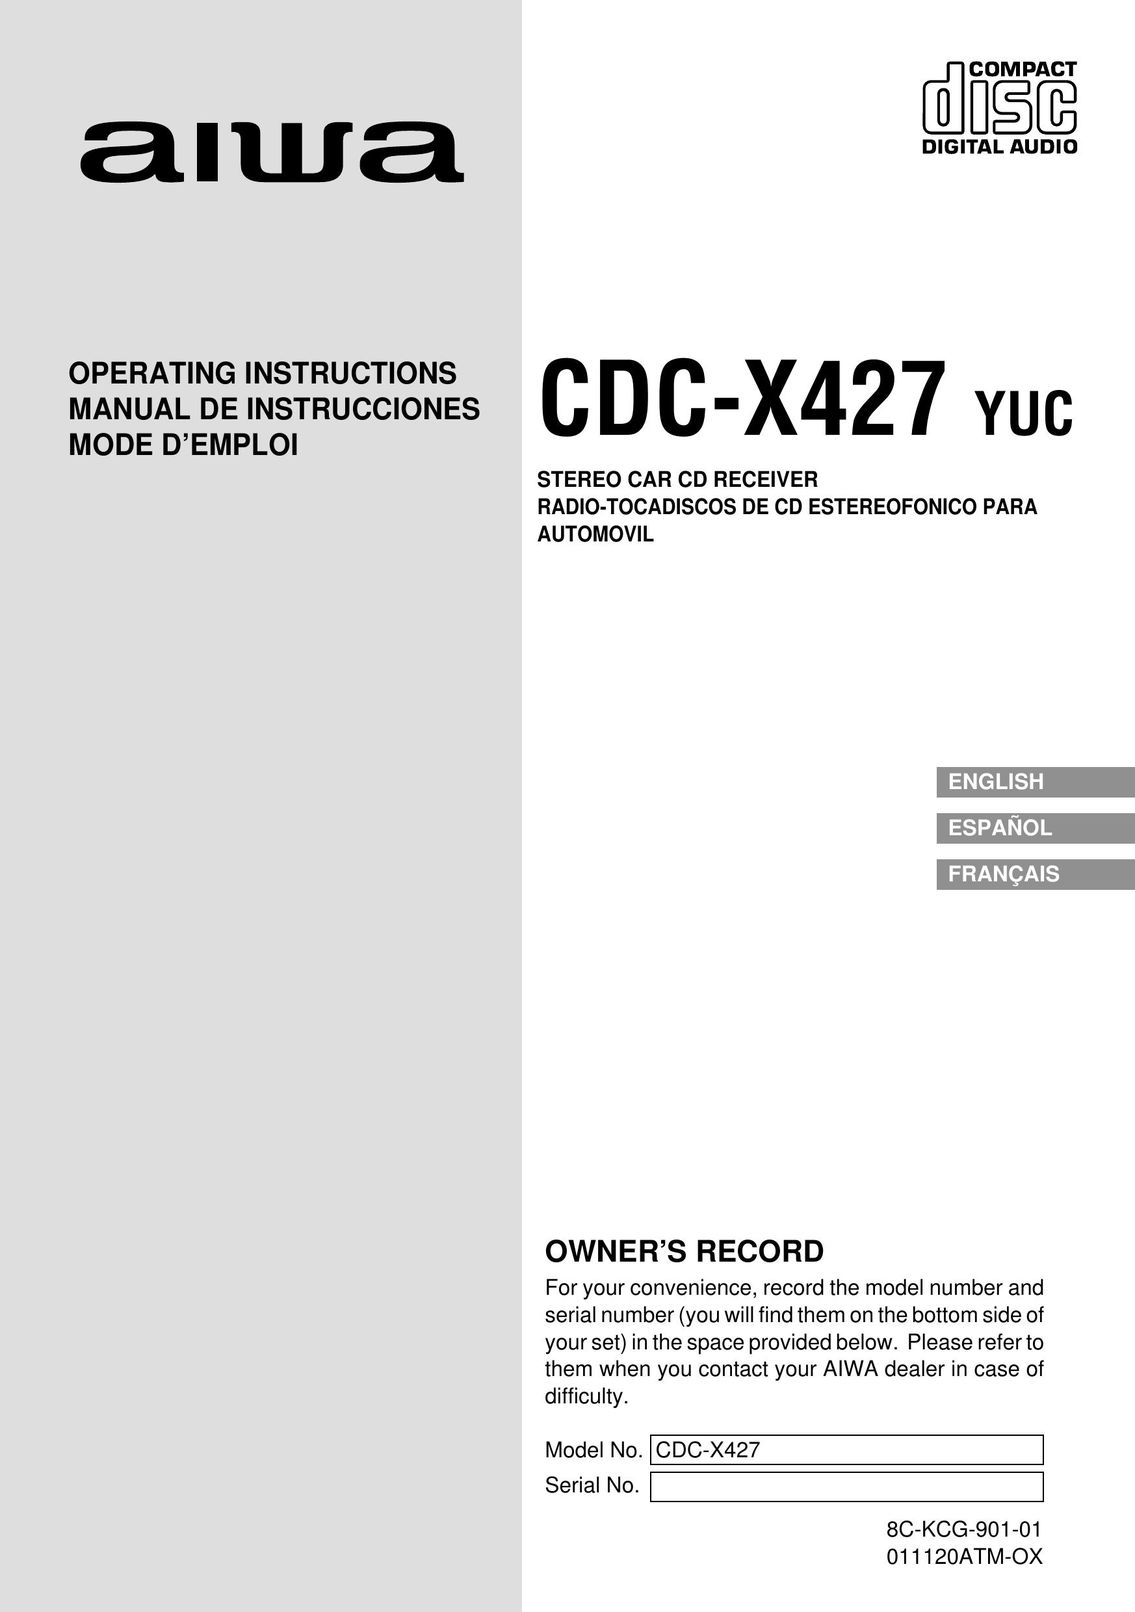 Aiwa CDC-X427 Car Stereo System User Manual